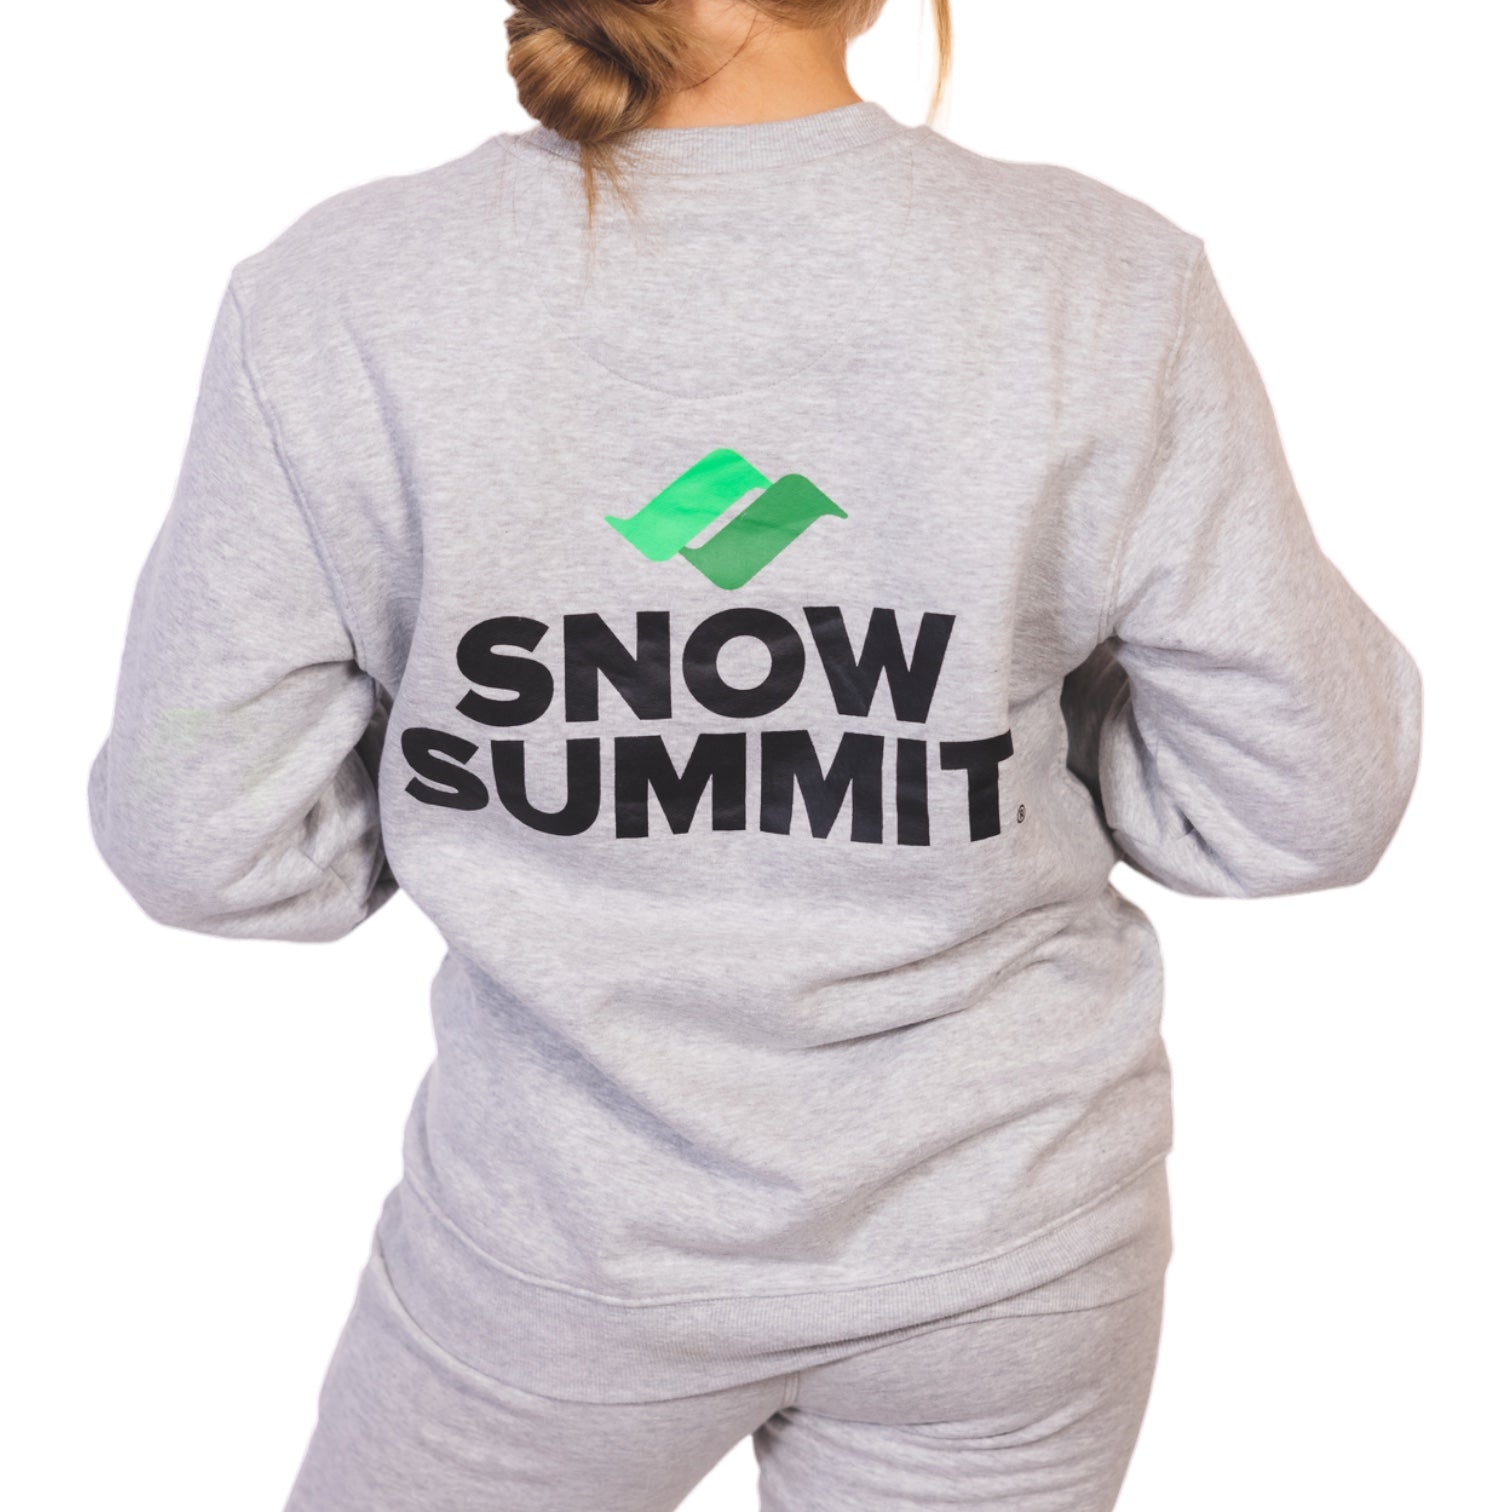 Grey long sleeve crewneck sweatshirt with snow summit logo on back